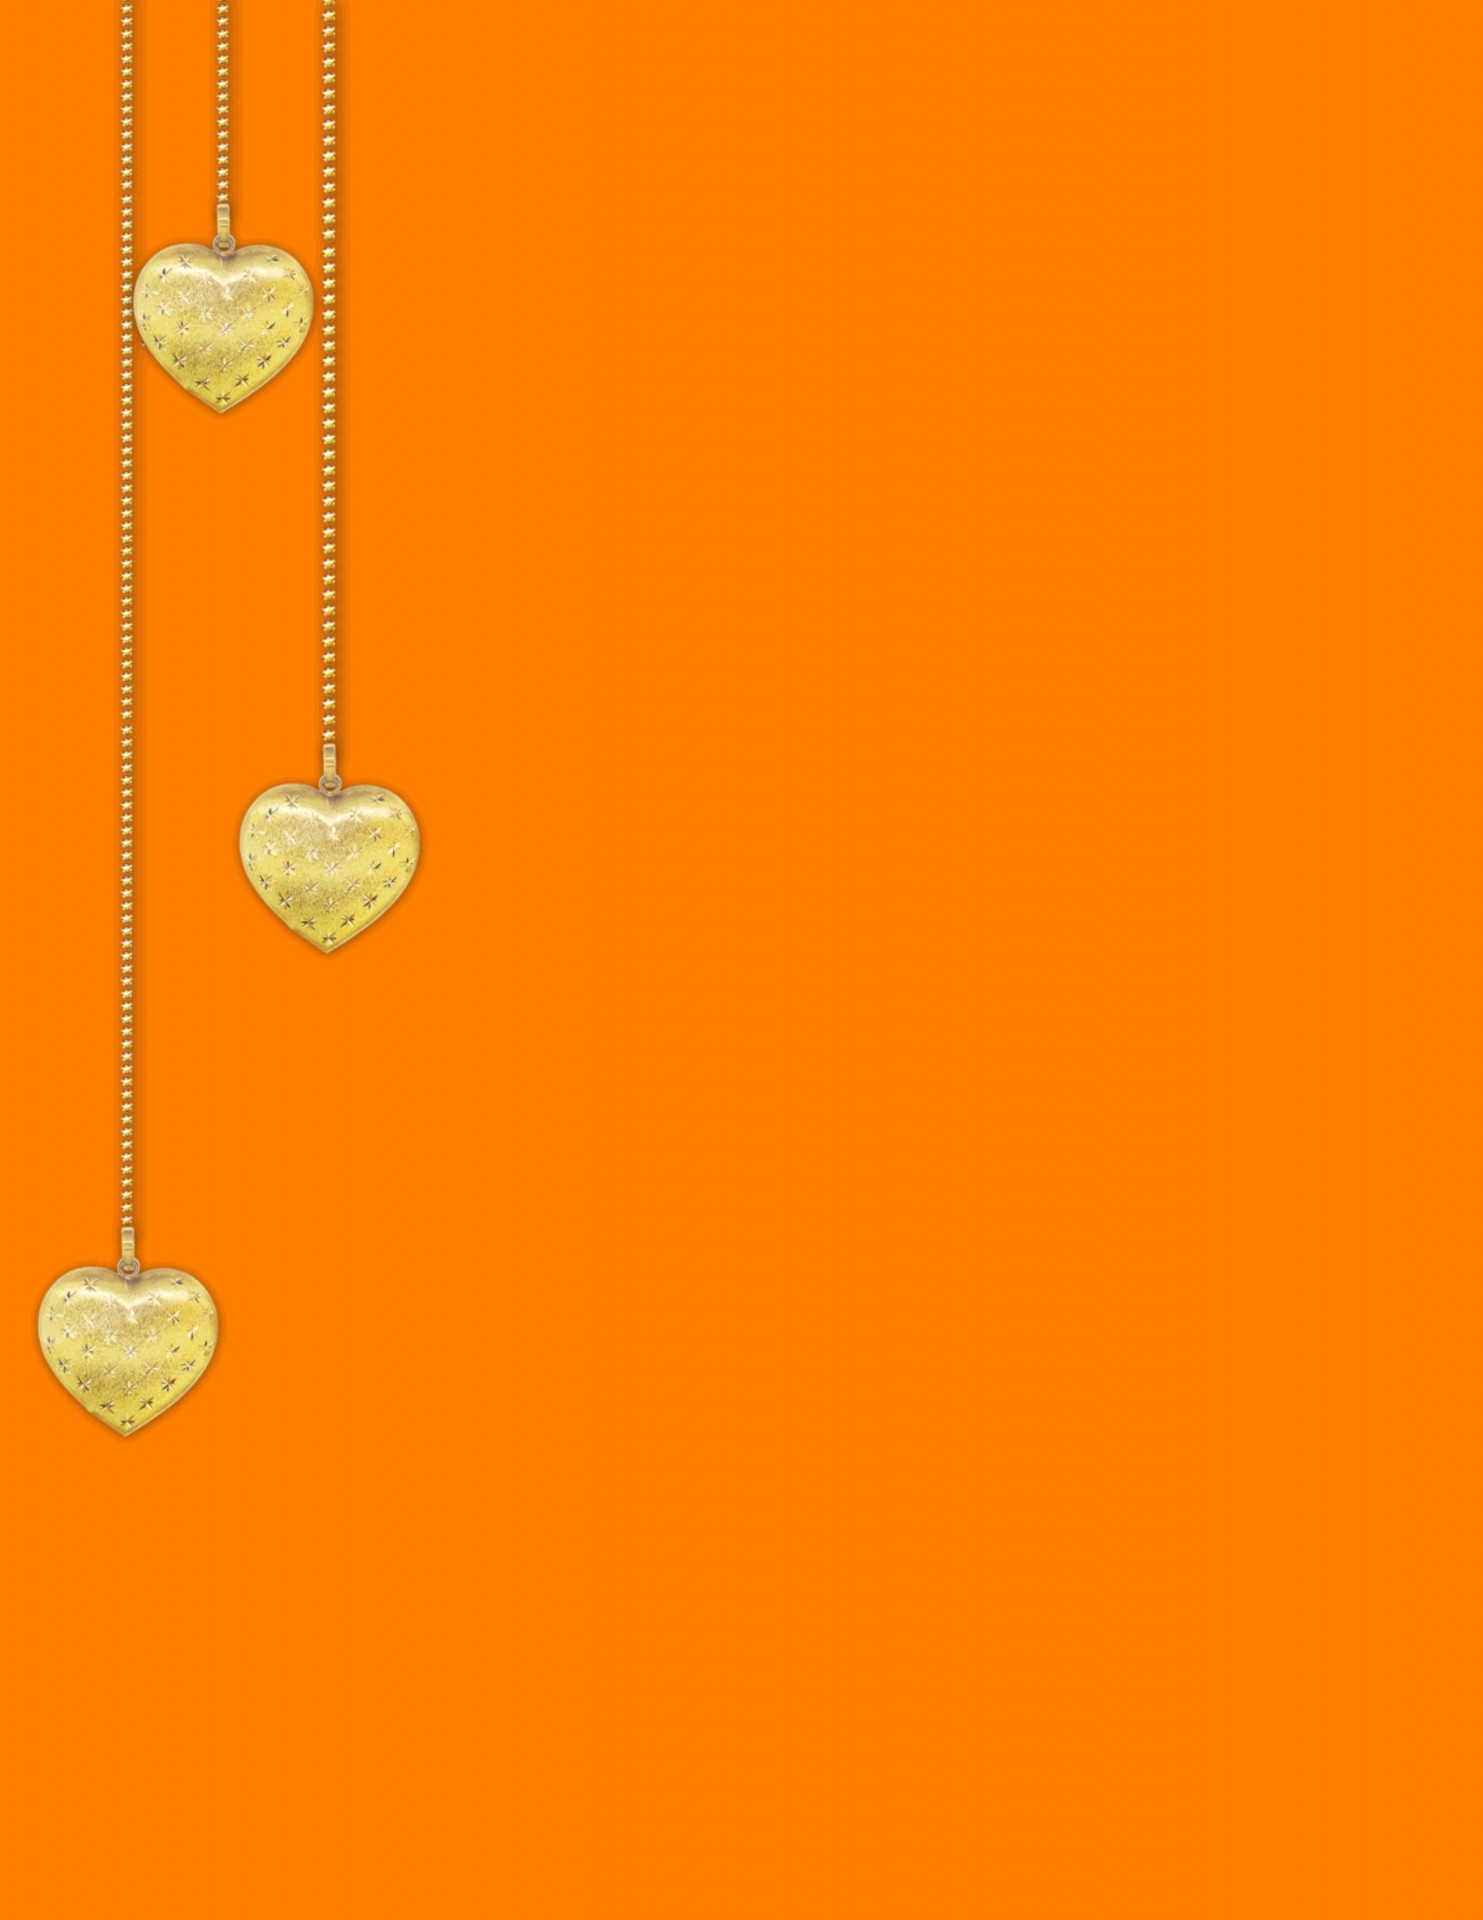 heart orange background heart orange background free photo